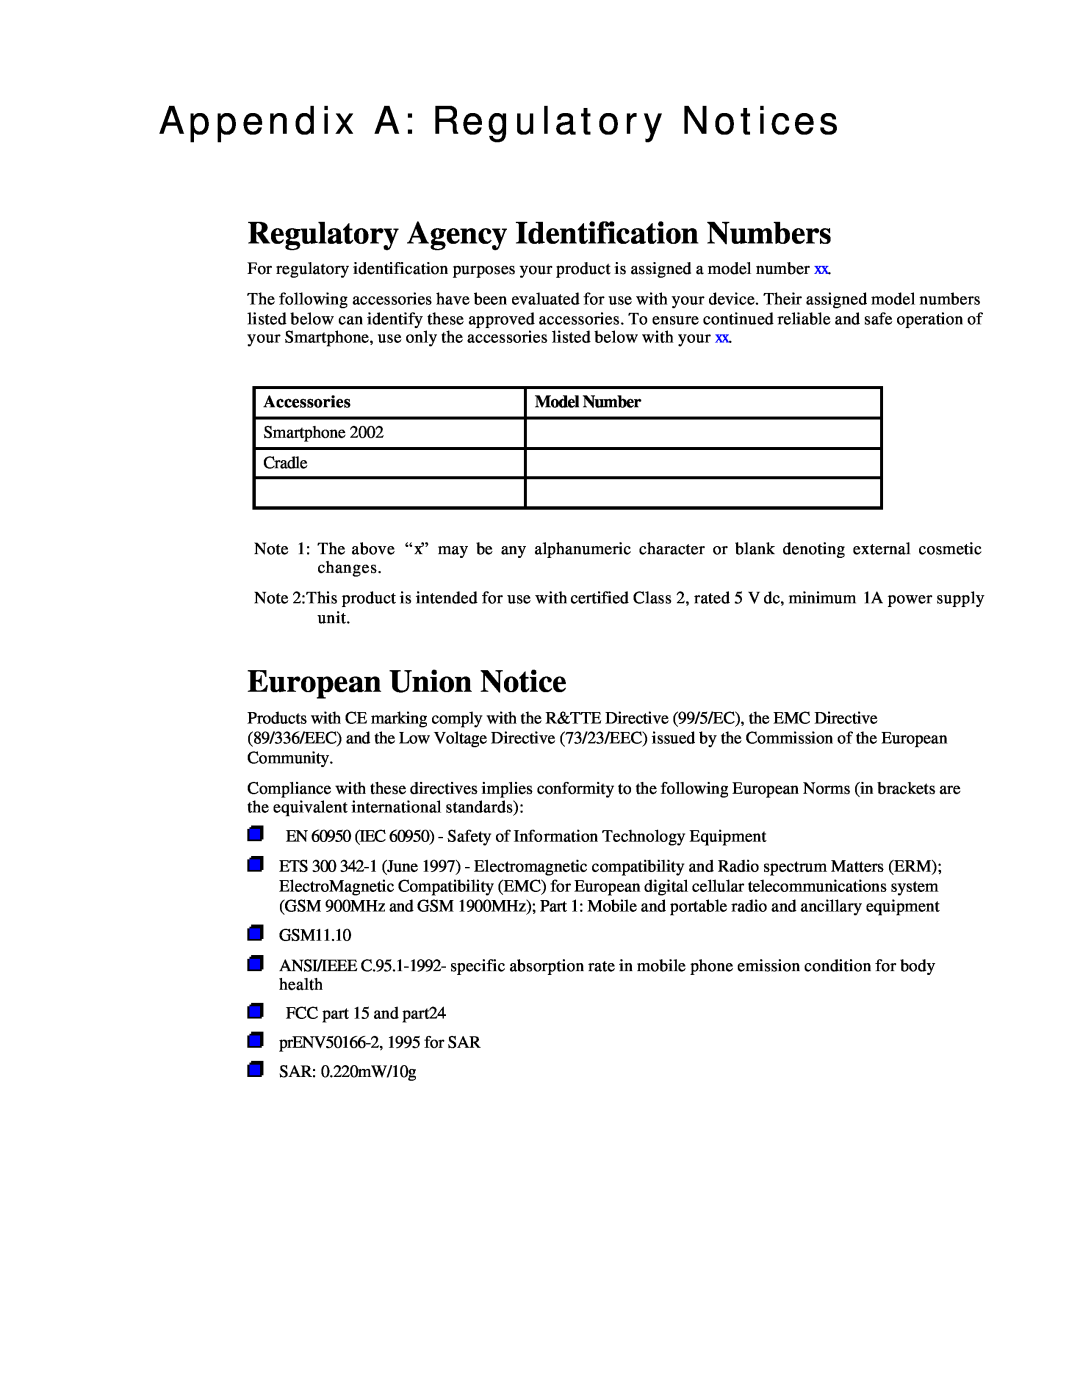 Microsoft Smartphone 2002 Appendix A Regulatory Notices, Regulatory Agency Identification Numbers, European Union Notice 